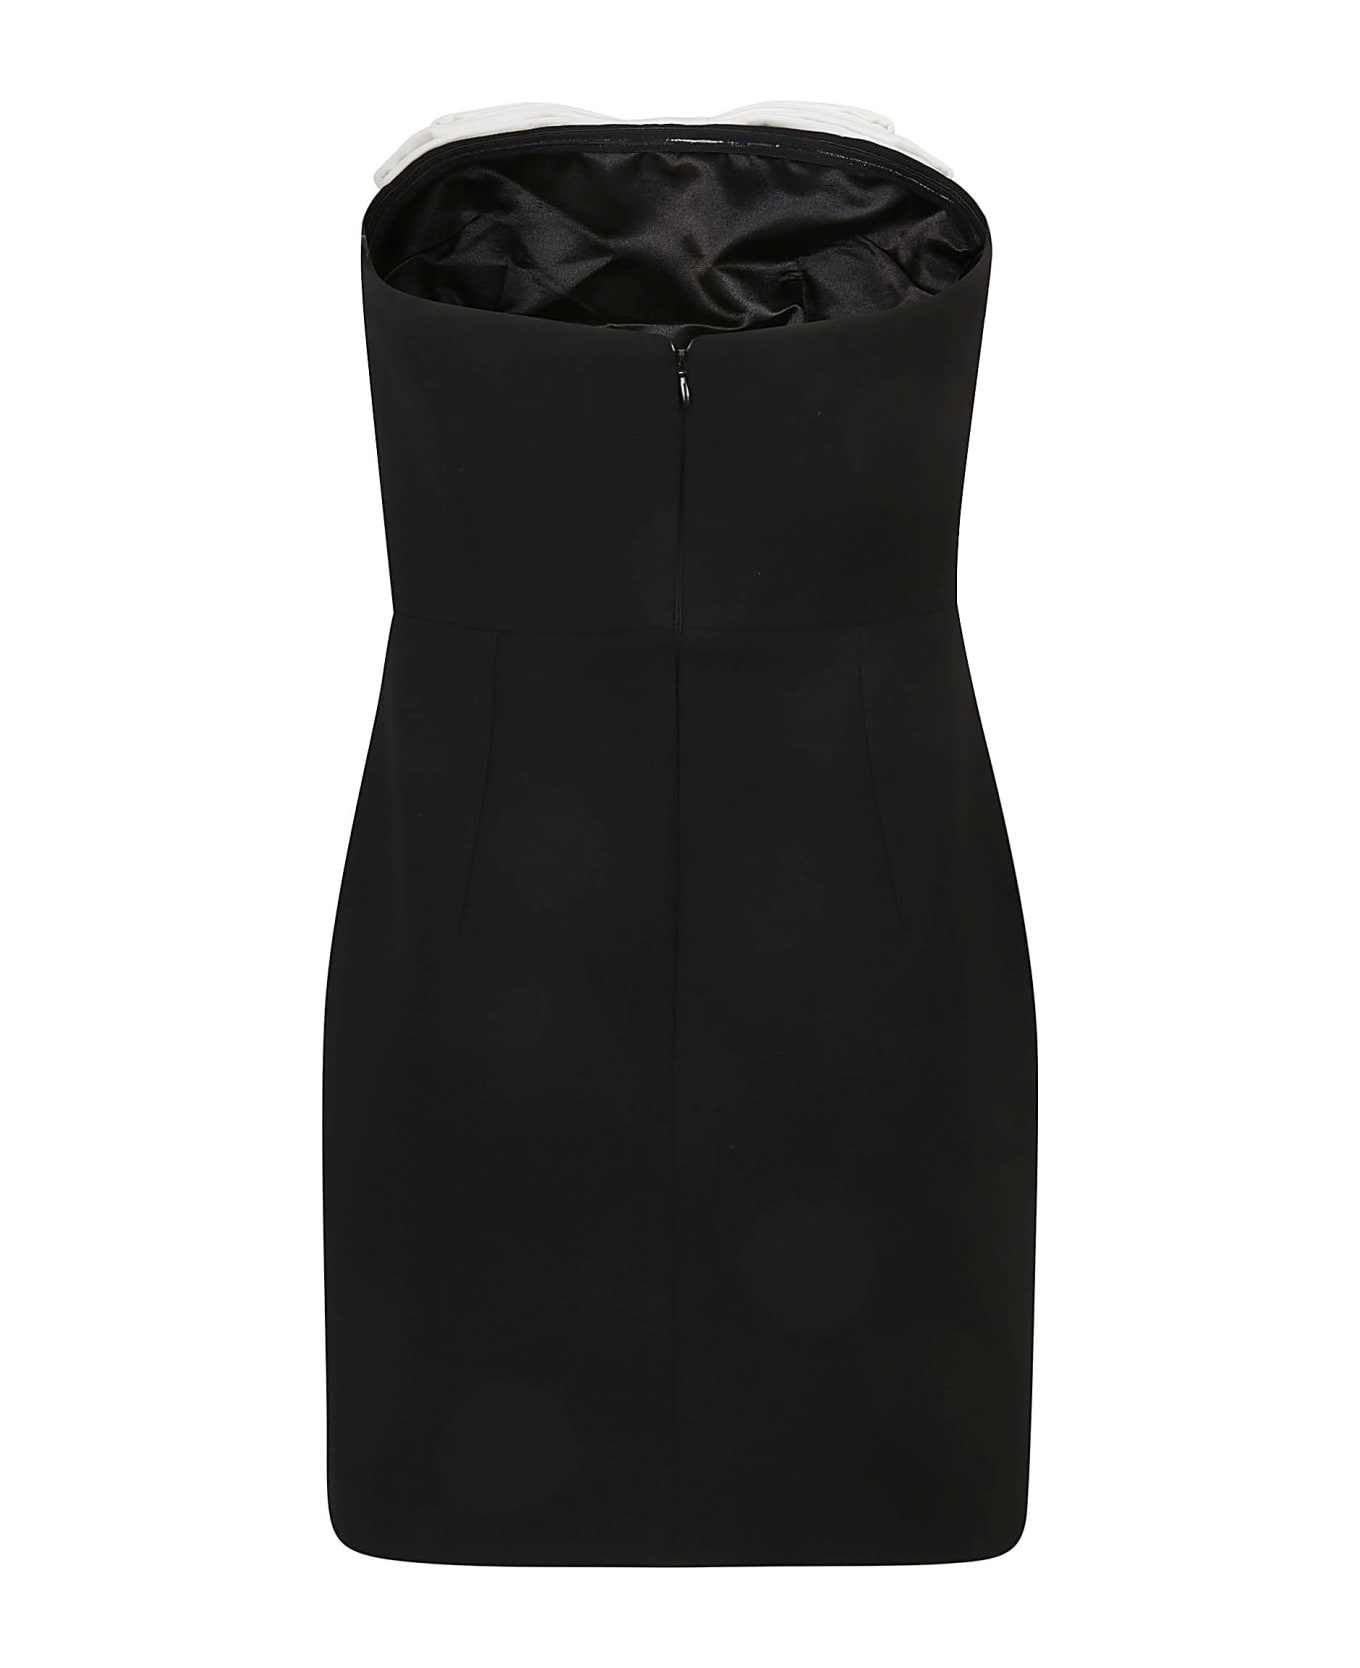 NEW ARRIVALS The Elea Mini Dress - Black